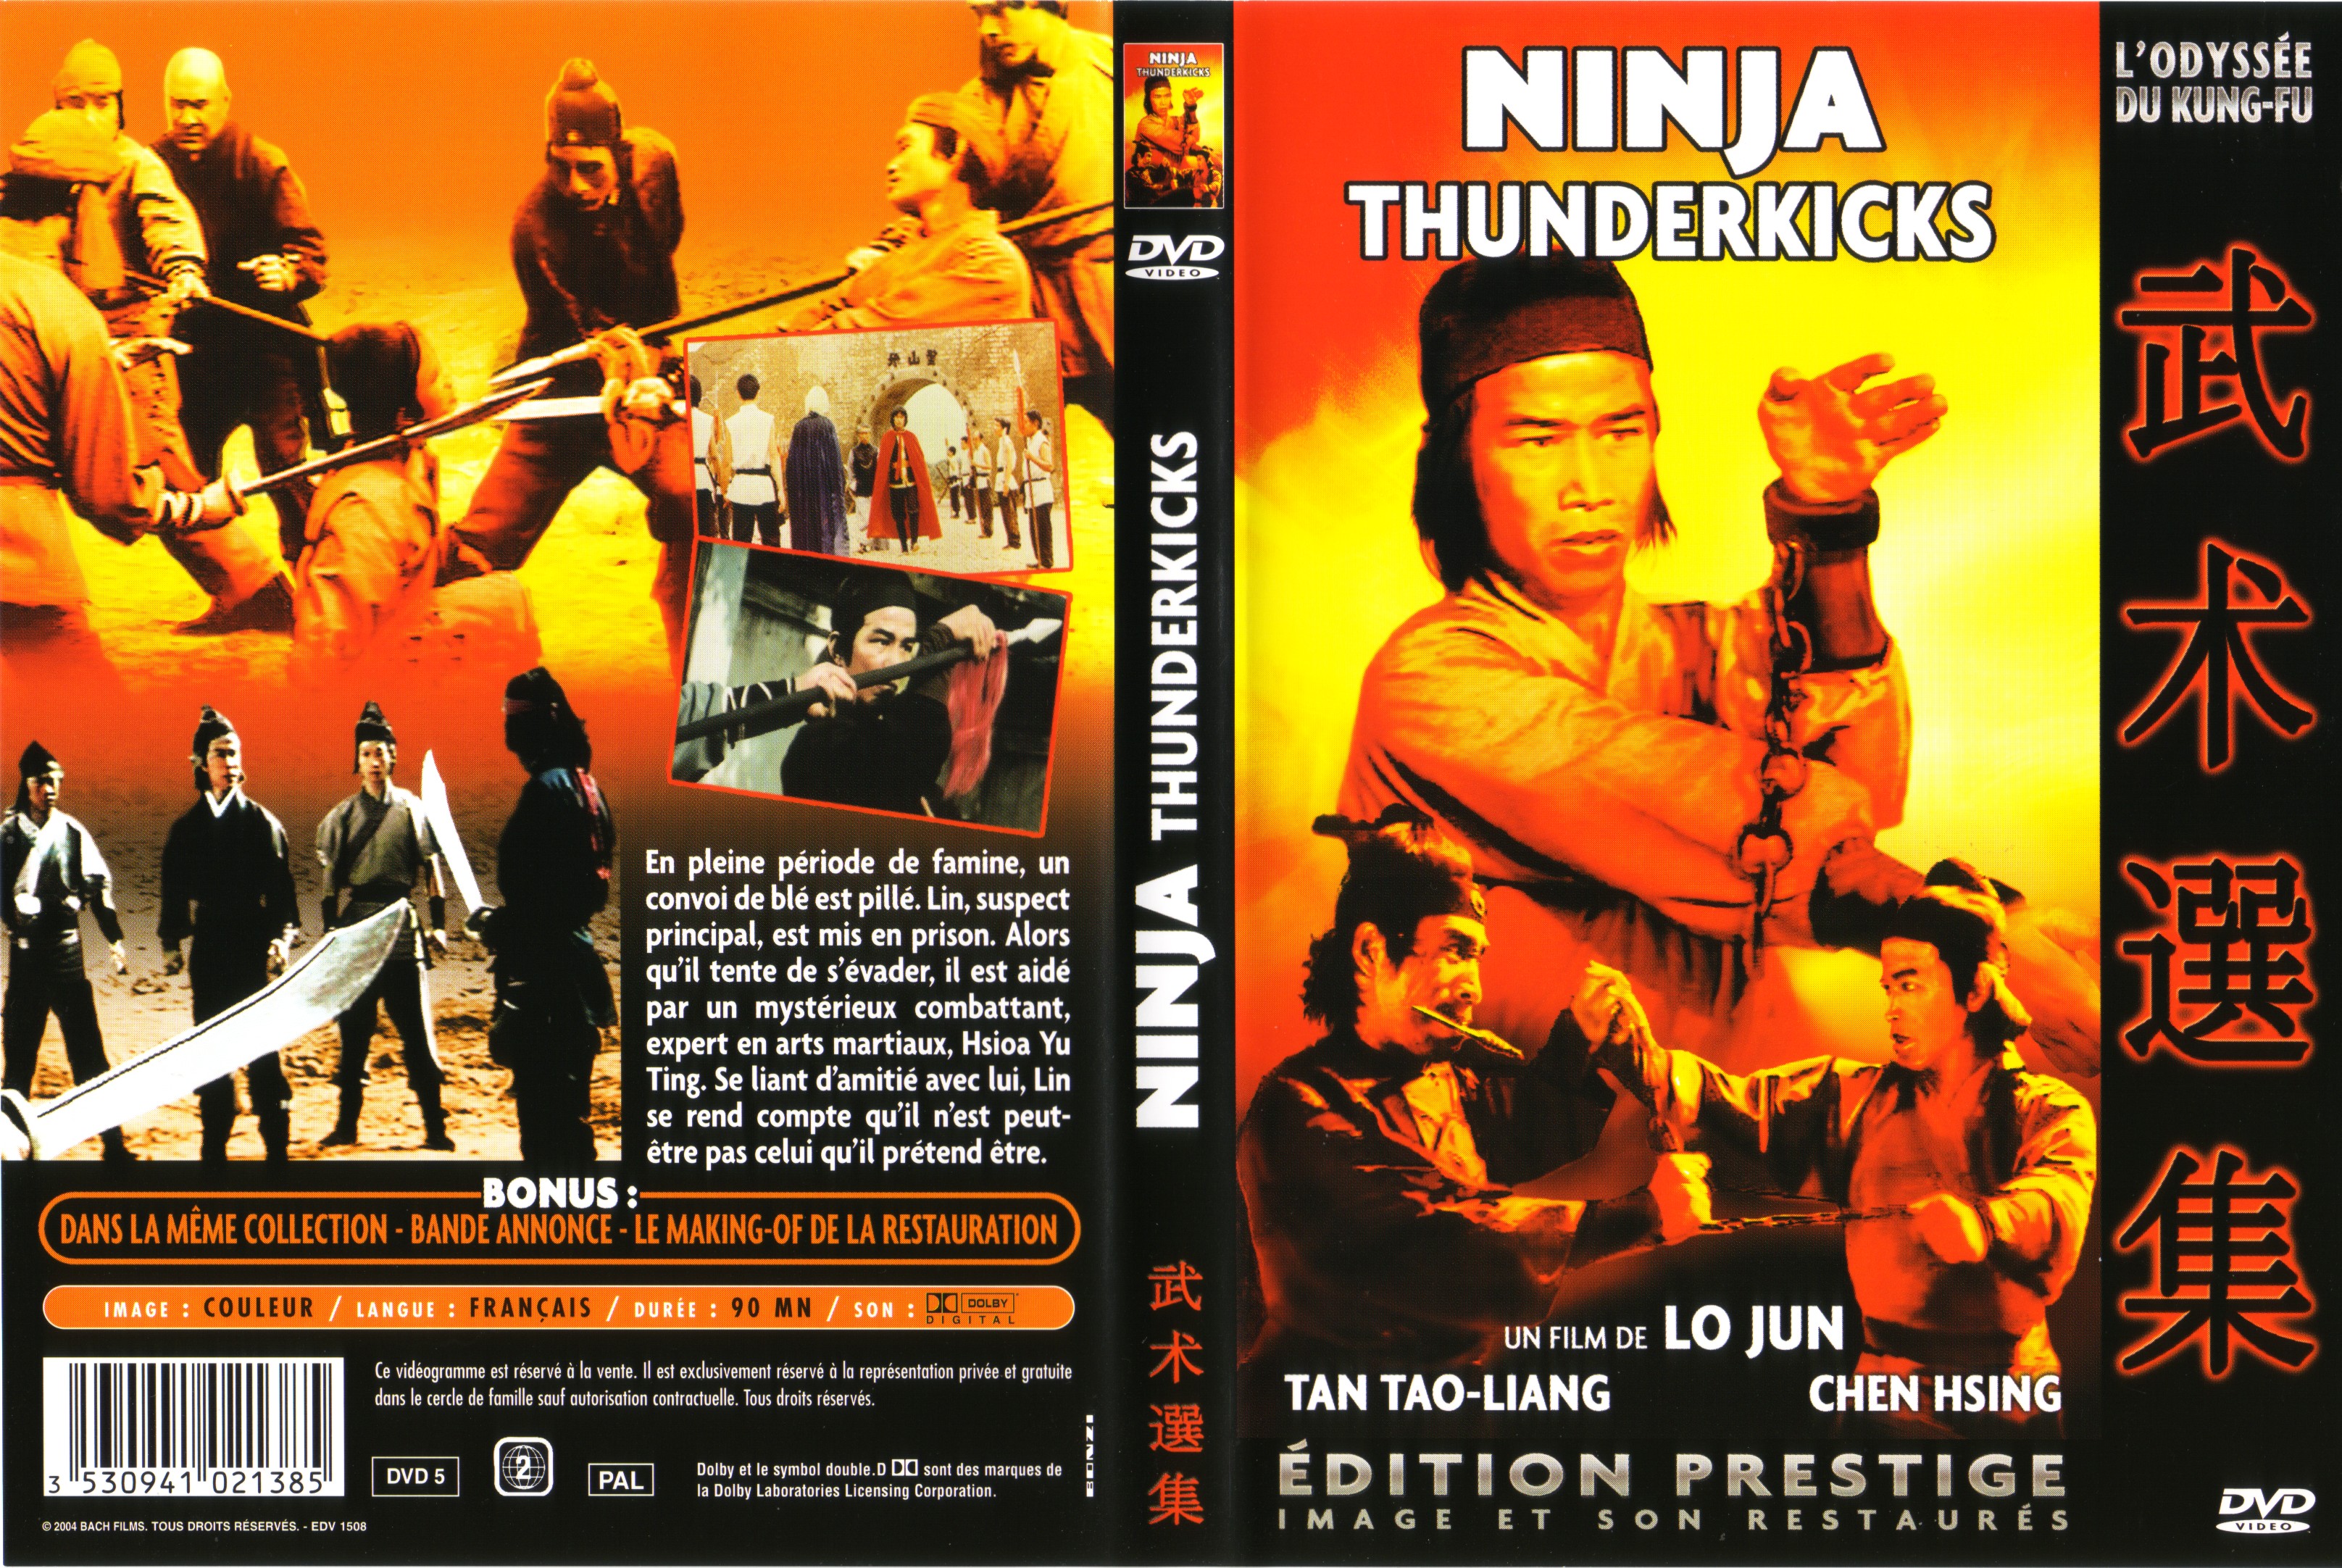 Jaquette DVD Ninja thunderkicks